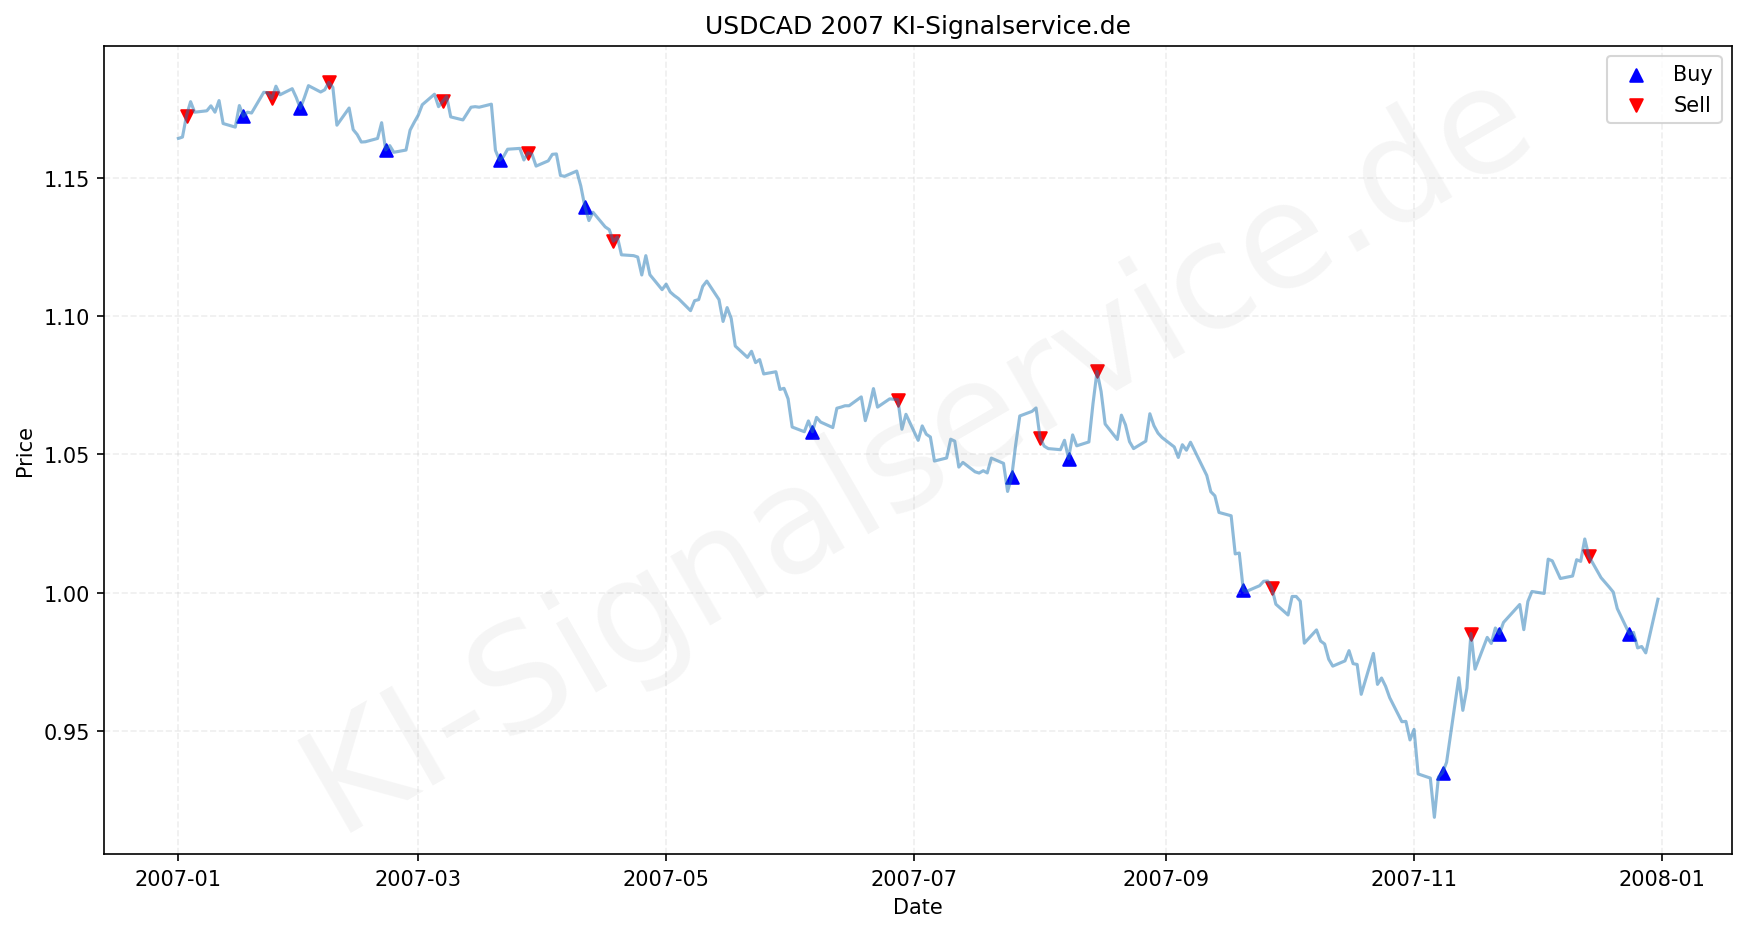 USDCAD Chart - KI Tradingsignale 2007